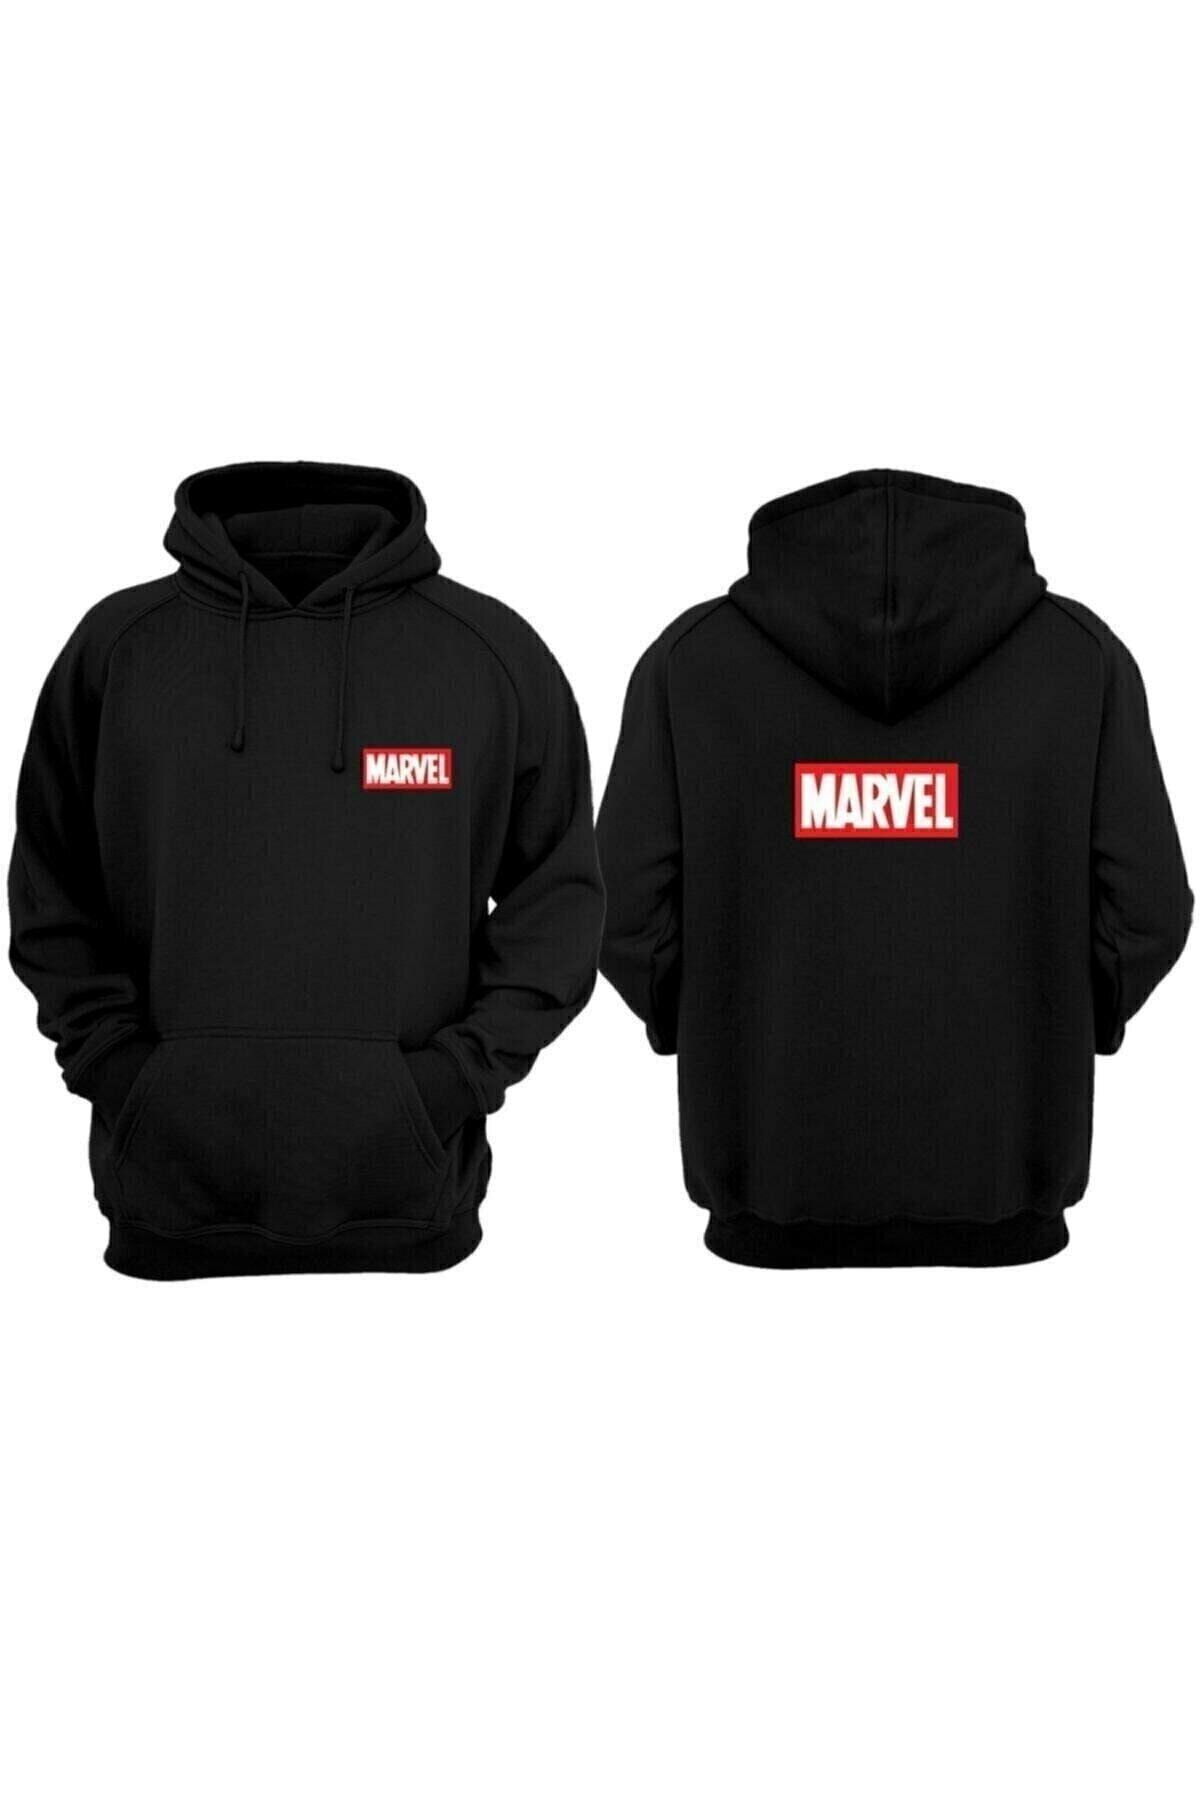 Know Marvel Hoodie Sweatshirt